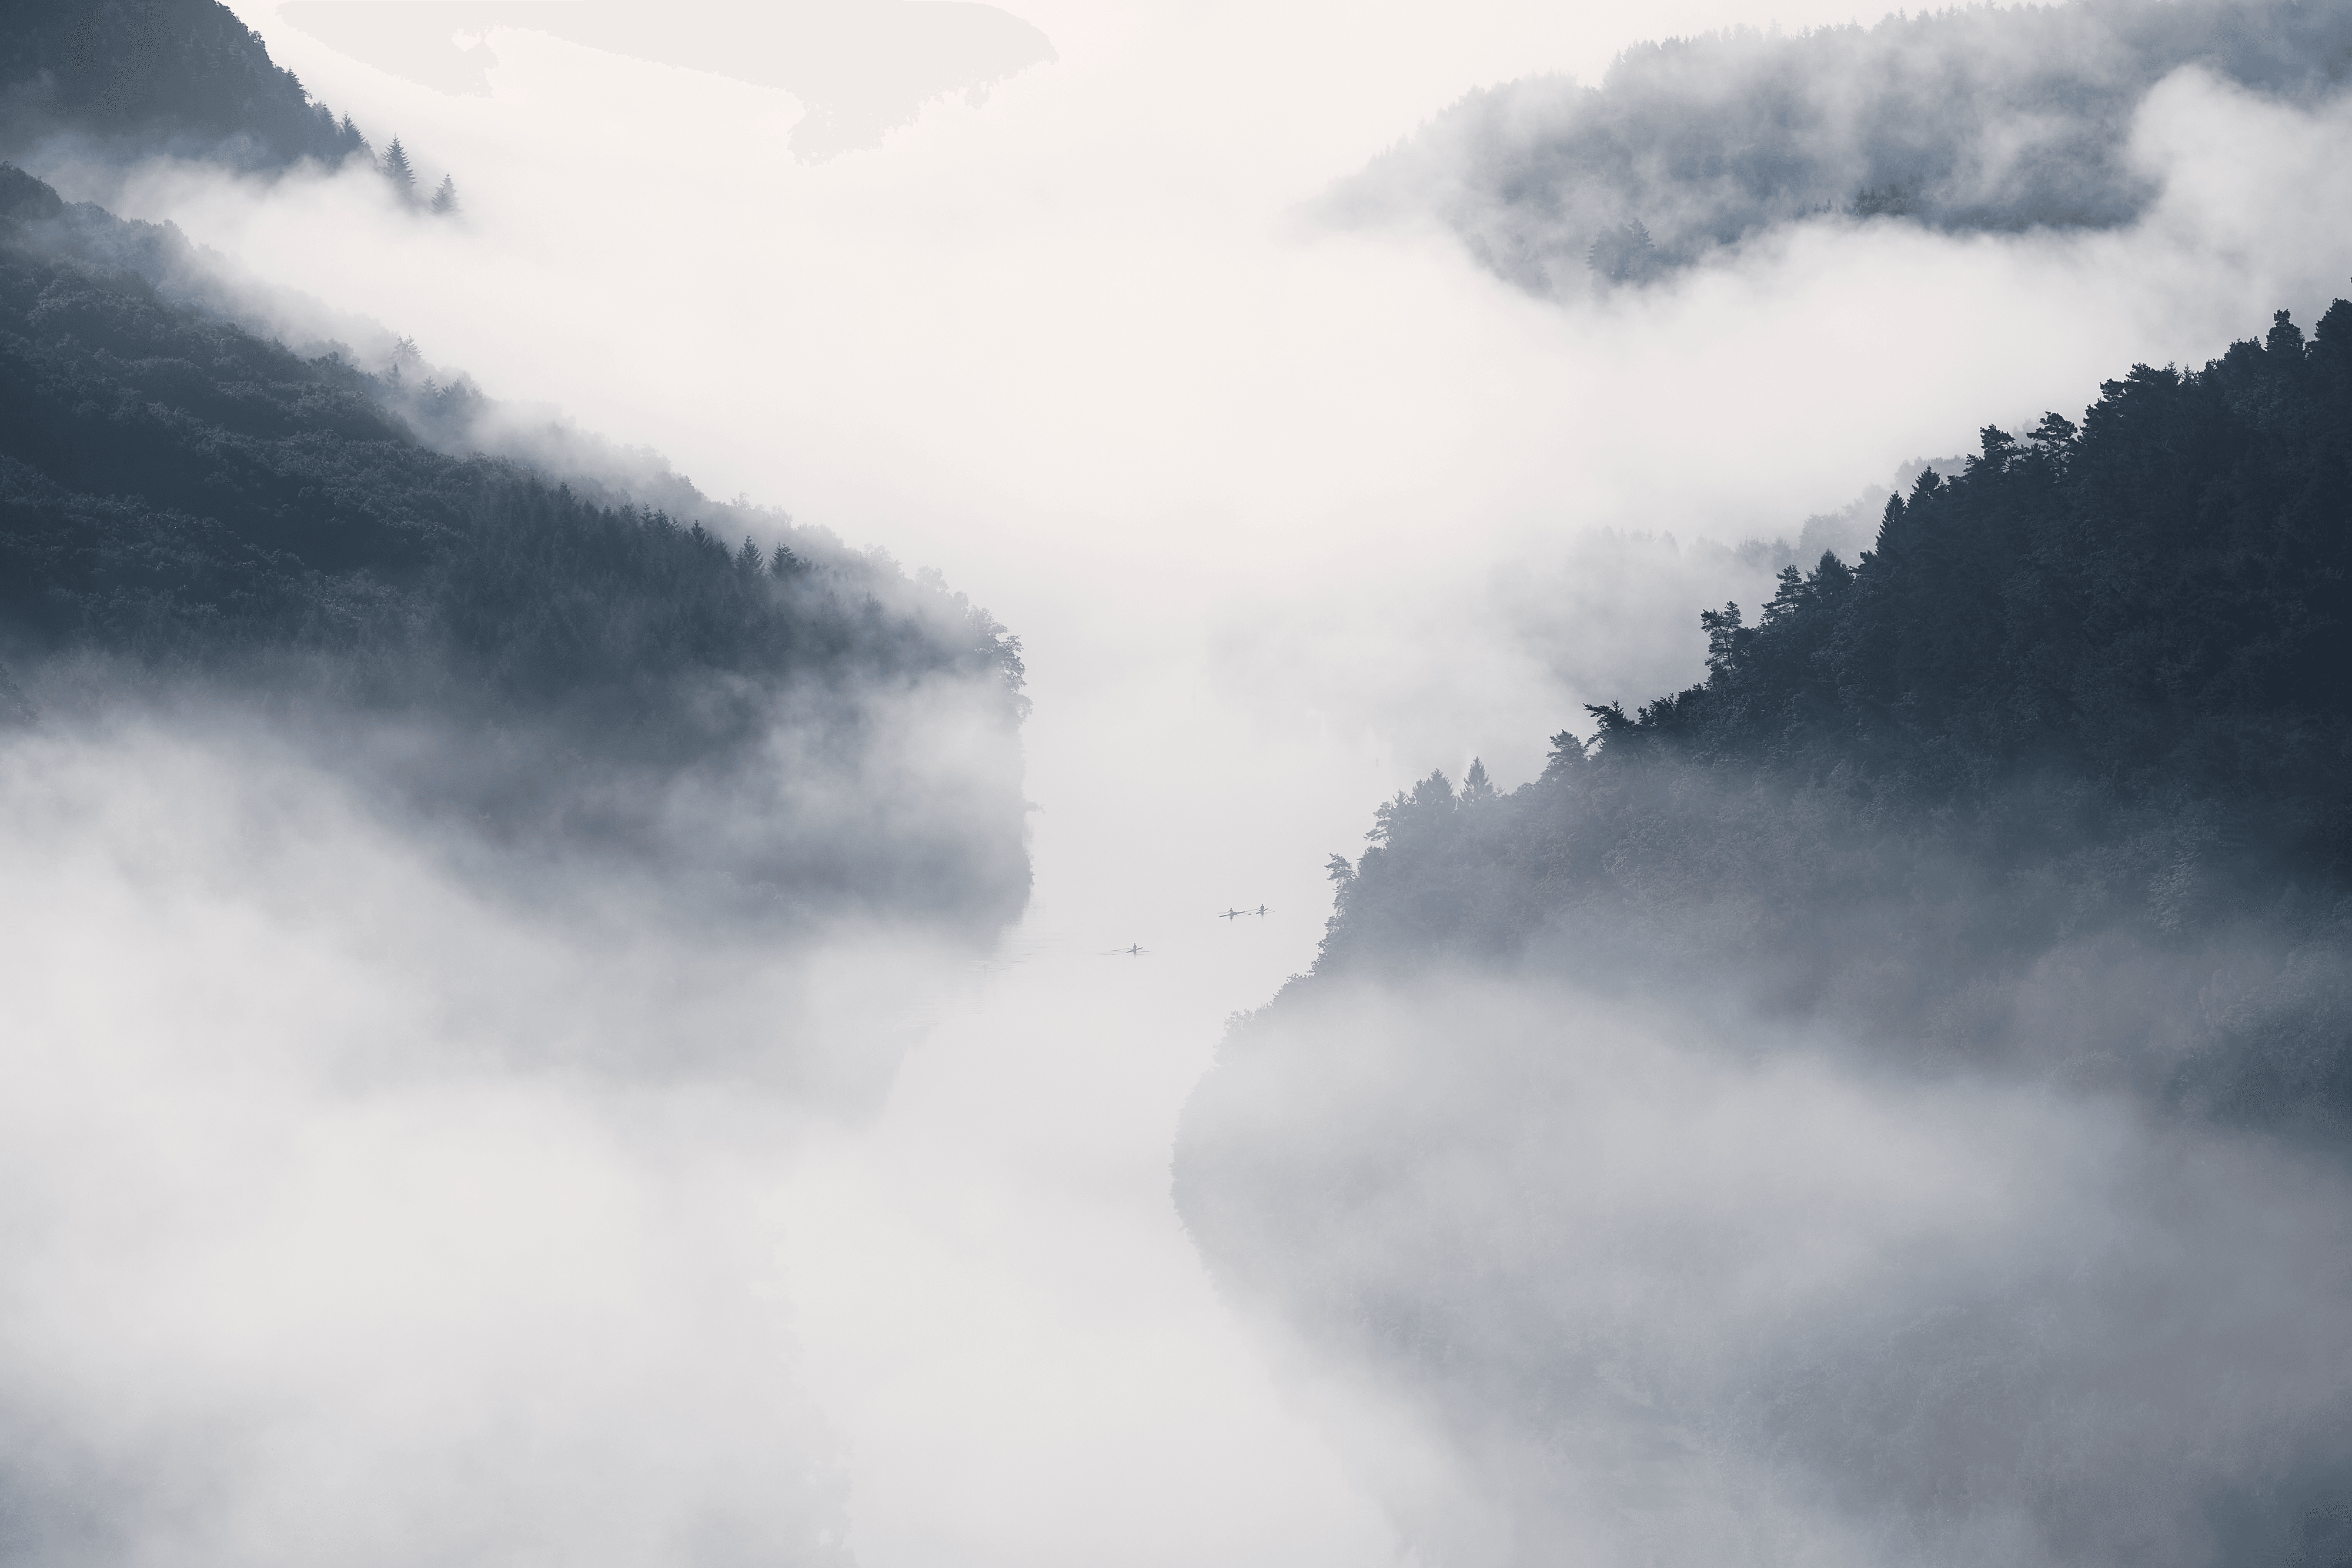 Gliding through the fog